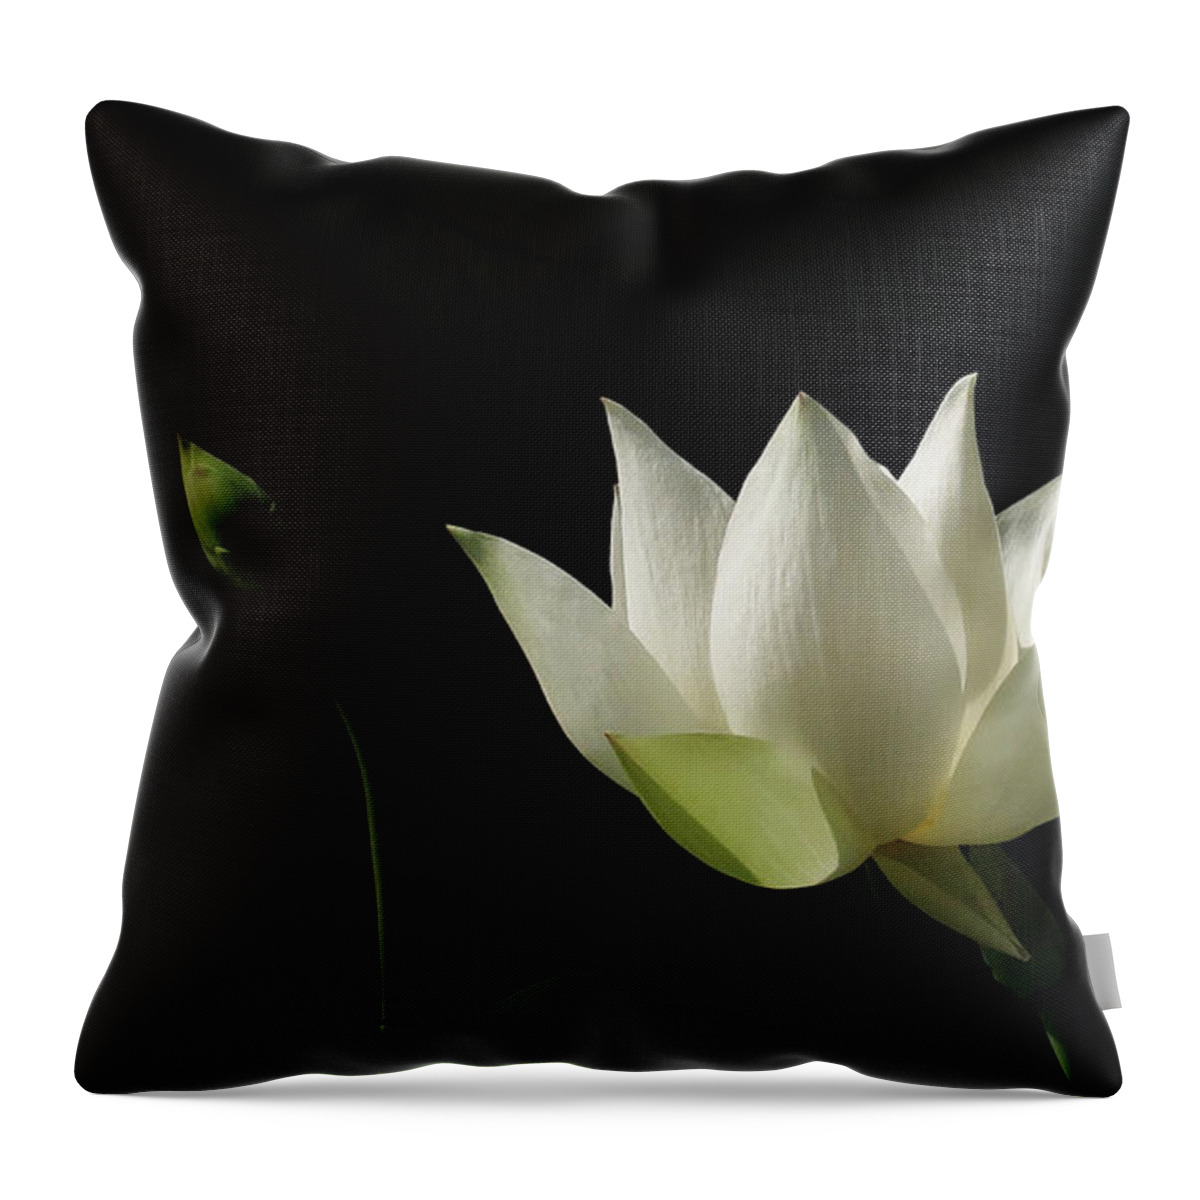 Garden Throw Pillow featuring the photograph White Lotus Profile by Deborah Smith